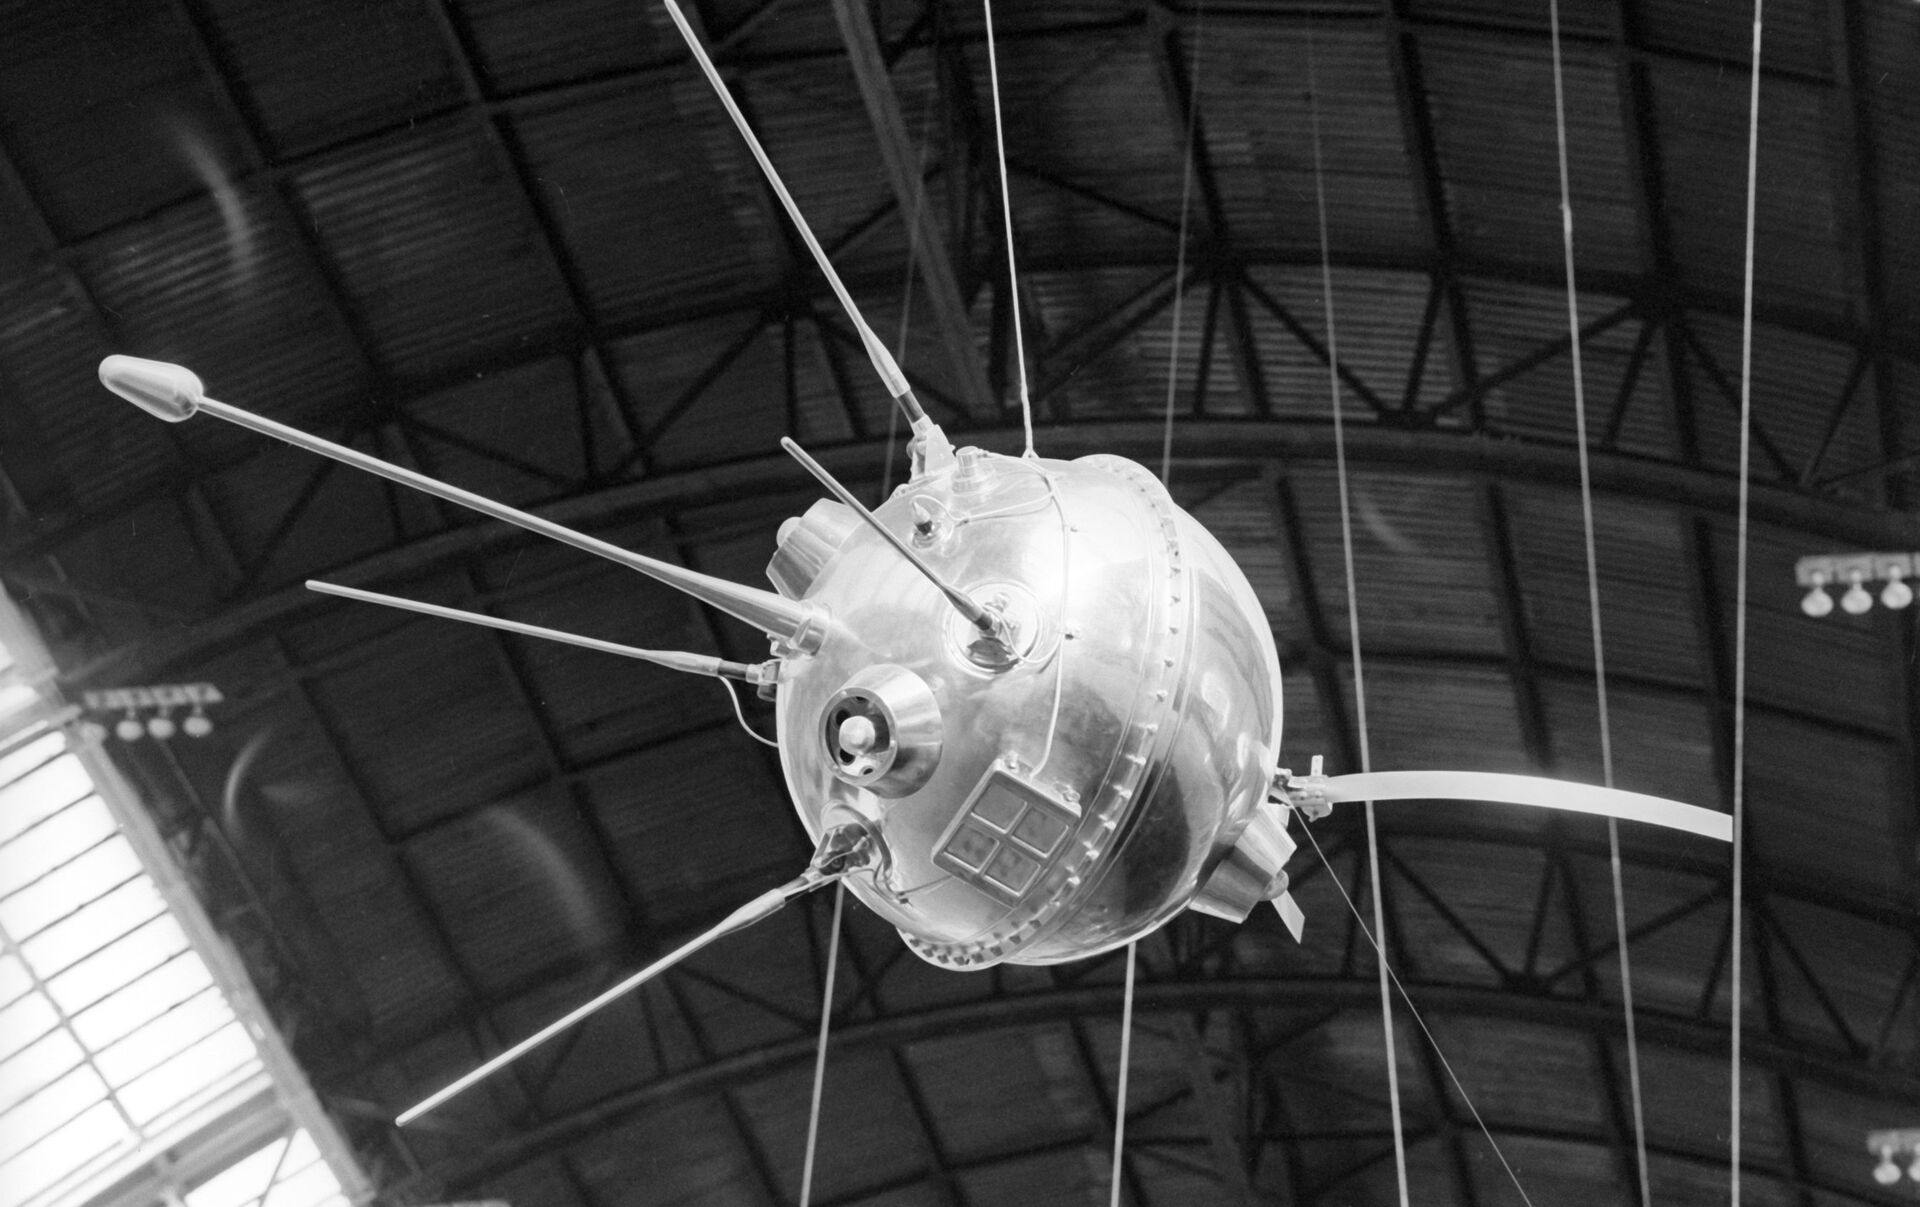 Первый спутник на поверхности луны. АМС Луна 1. Советская межпланетная станция «Луна-1». 2 Января 1959 года запущена первая Советская межпланетная станция Луна-1. Советская автоматическая межпланетная станция Луна-2.